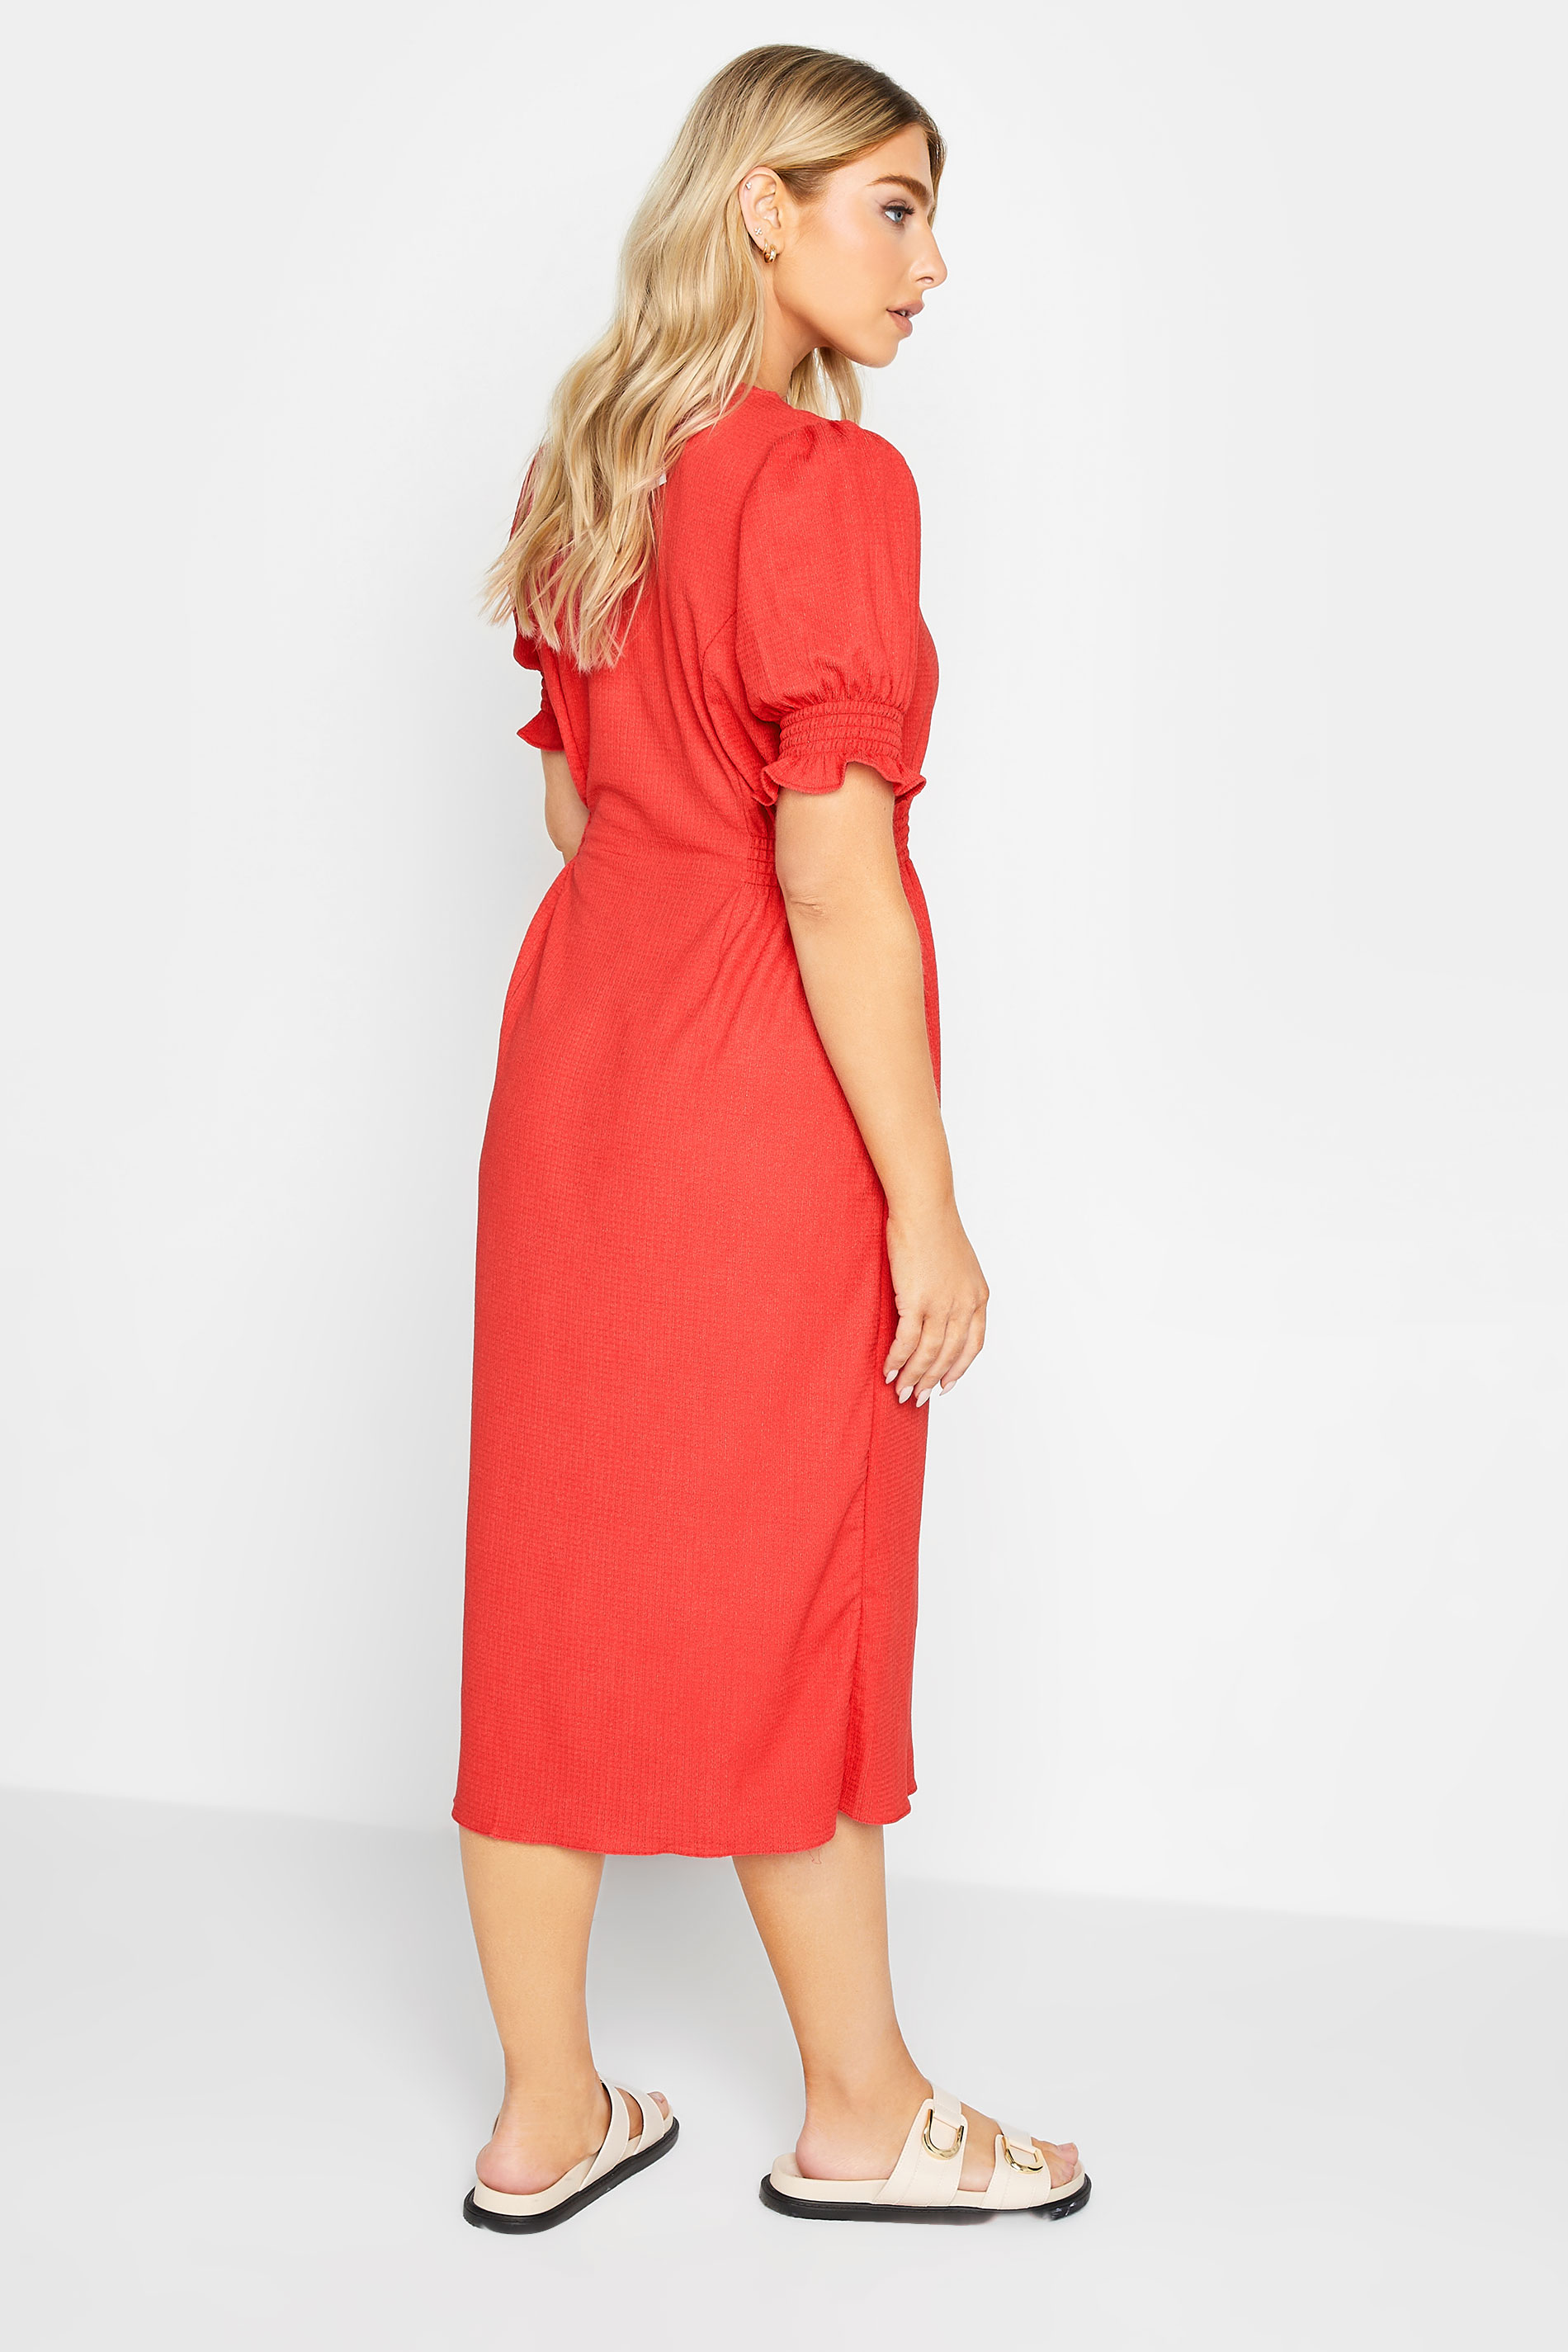 M&Co Red Button Through Midi Dress | M&Co  3